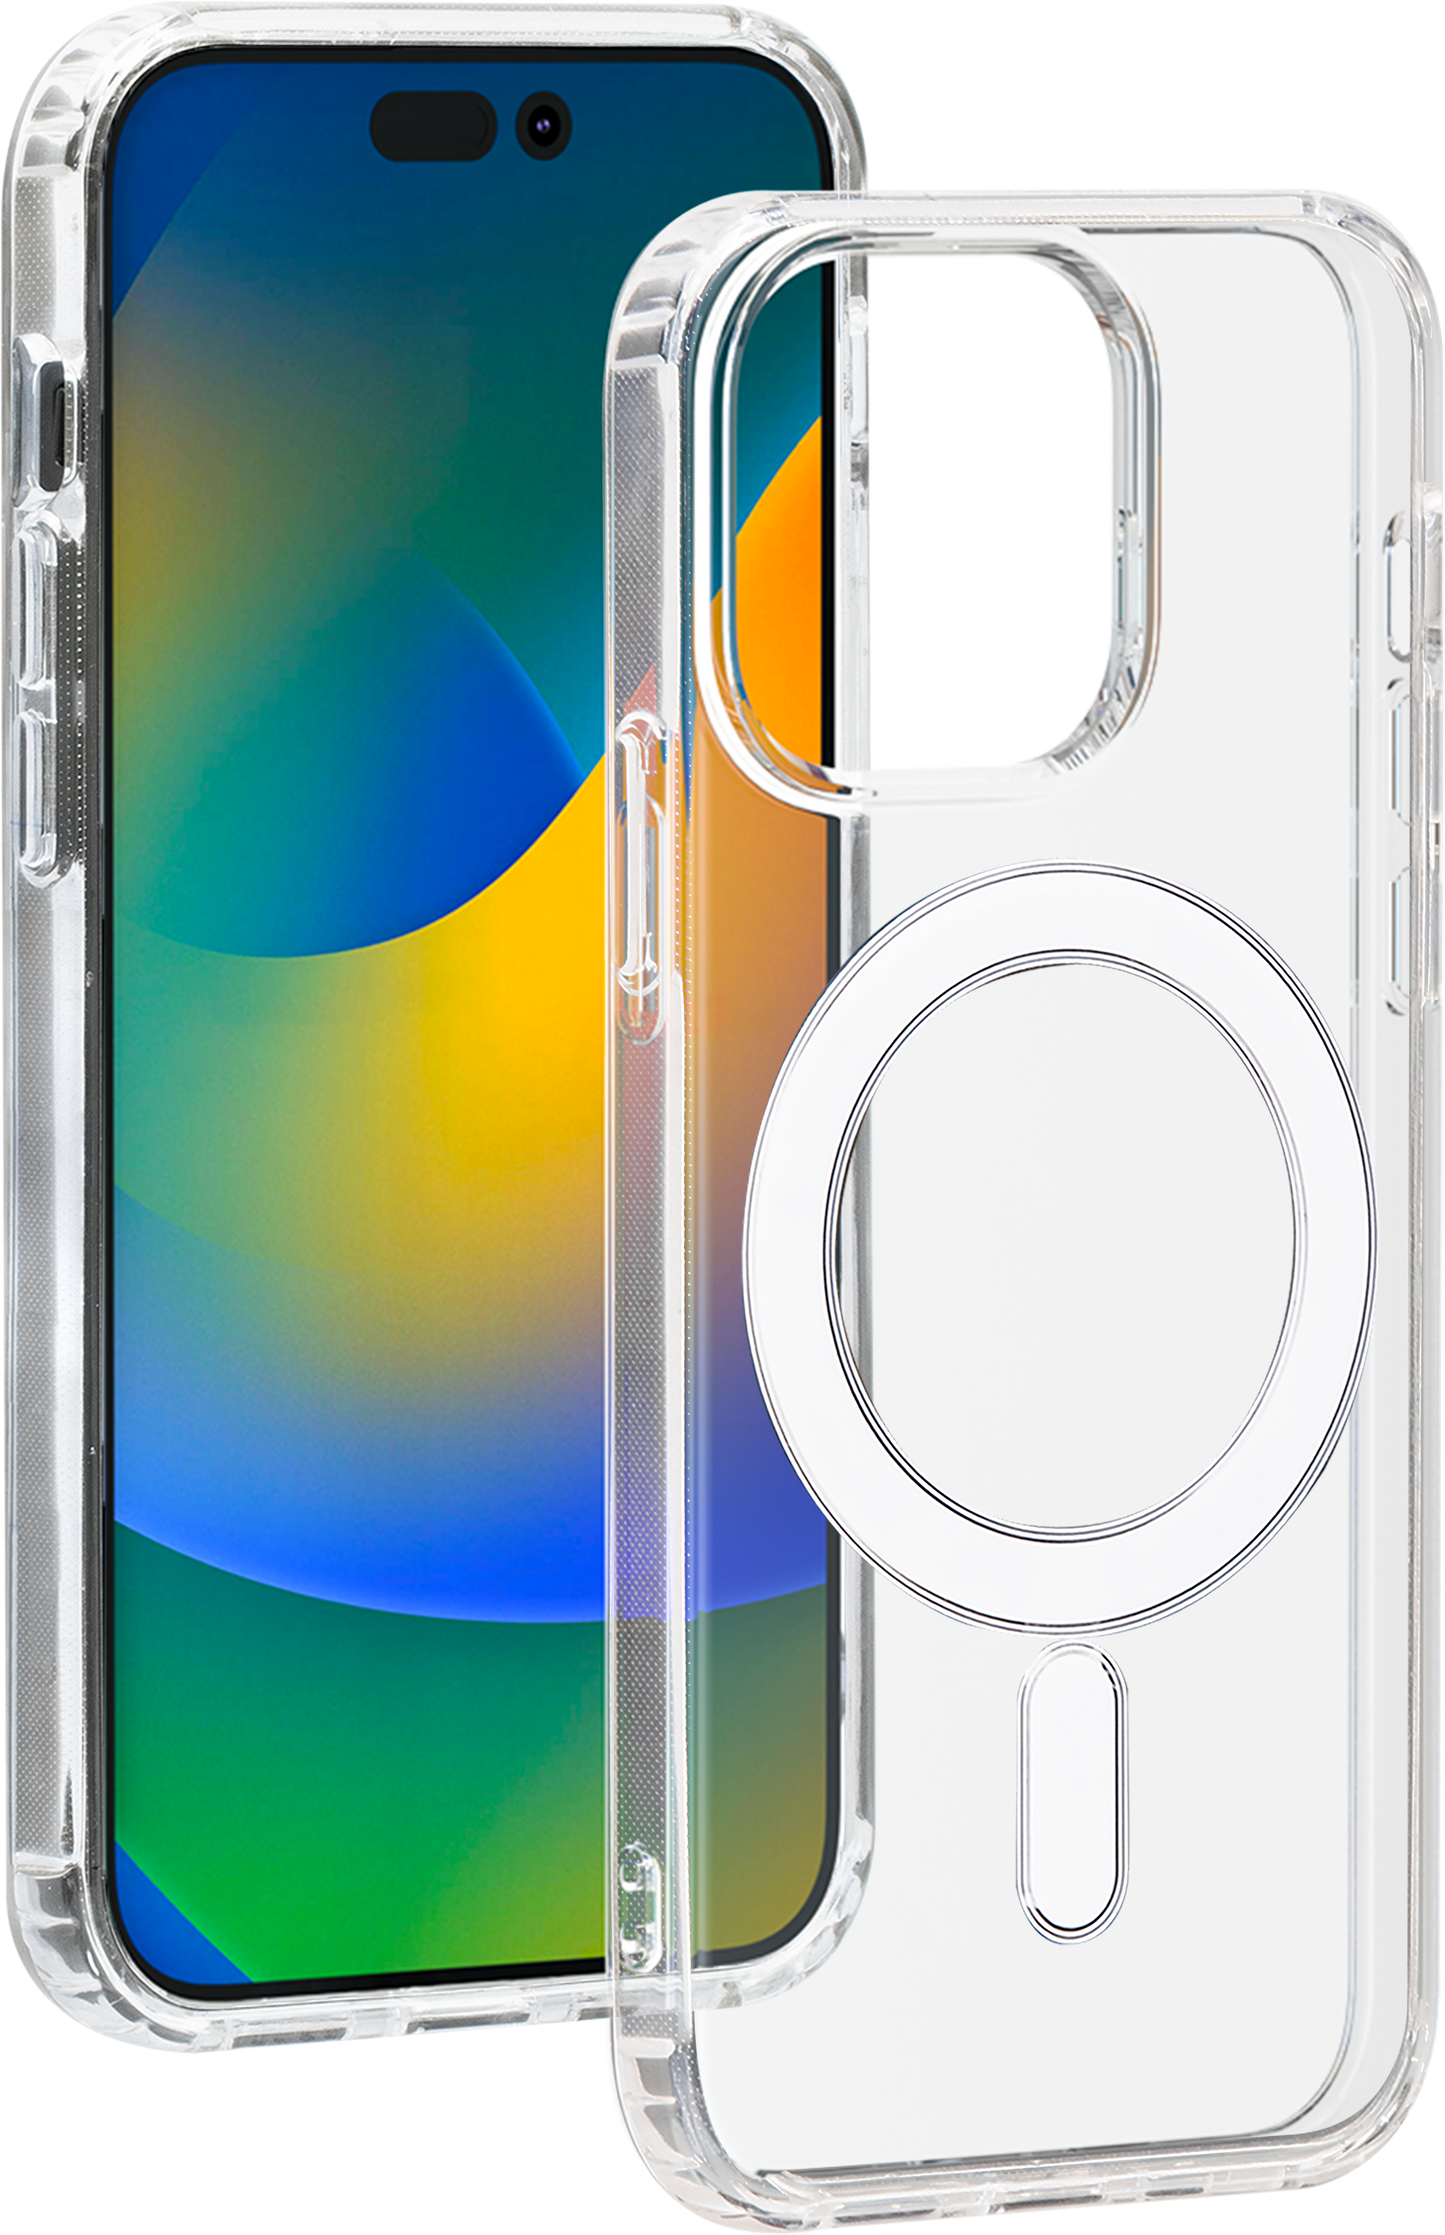 BIGBEN MagSafe Hybrid Cases transparent für iPhone 15 Pro